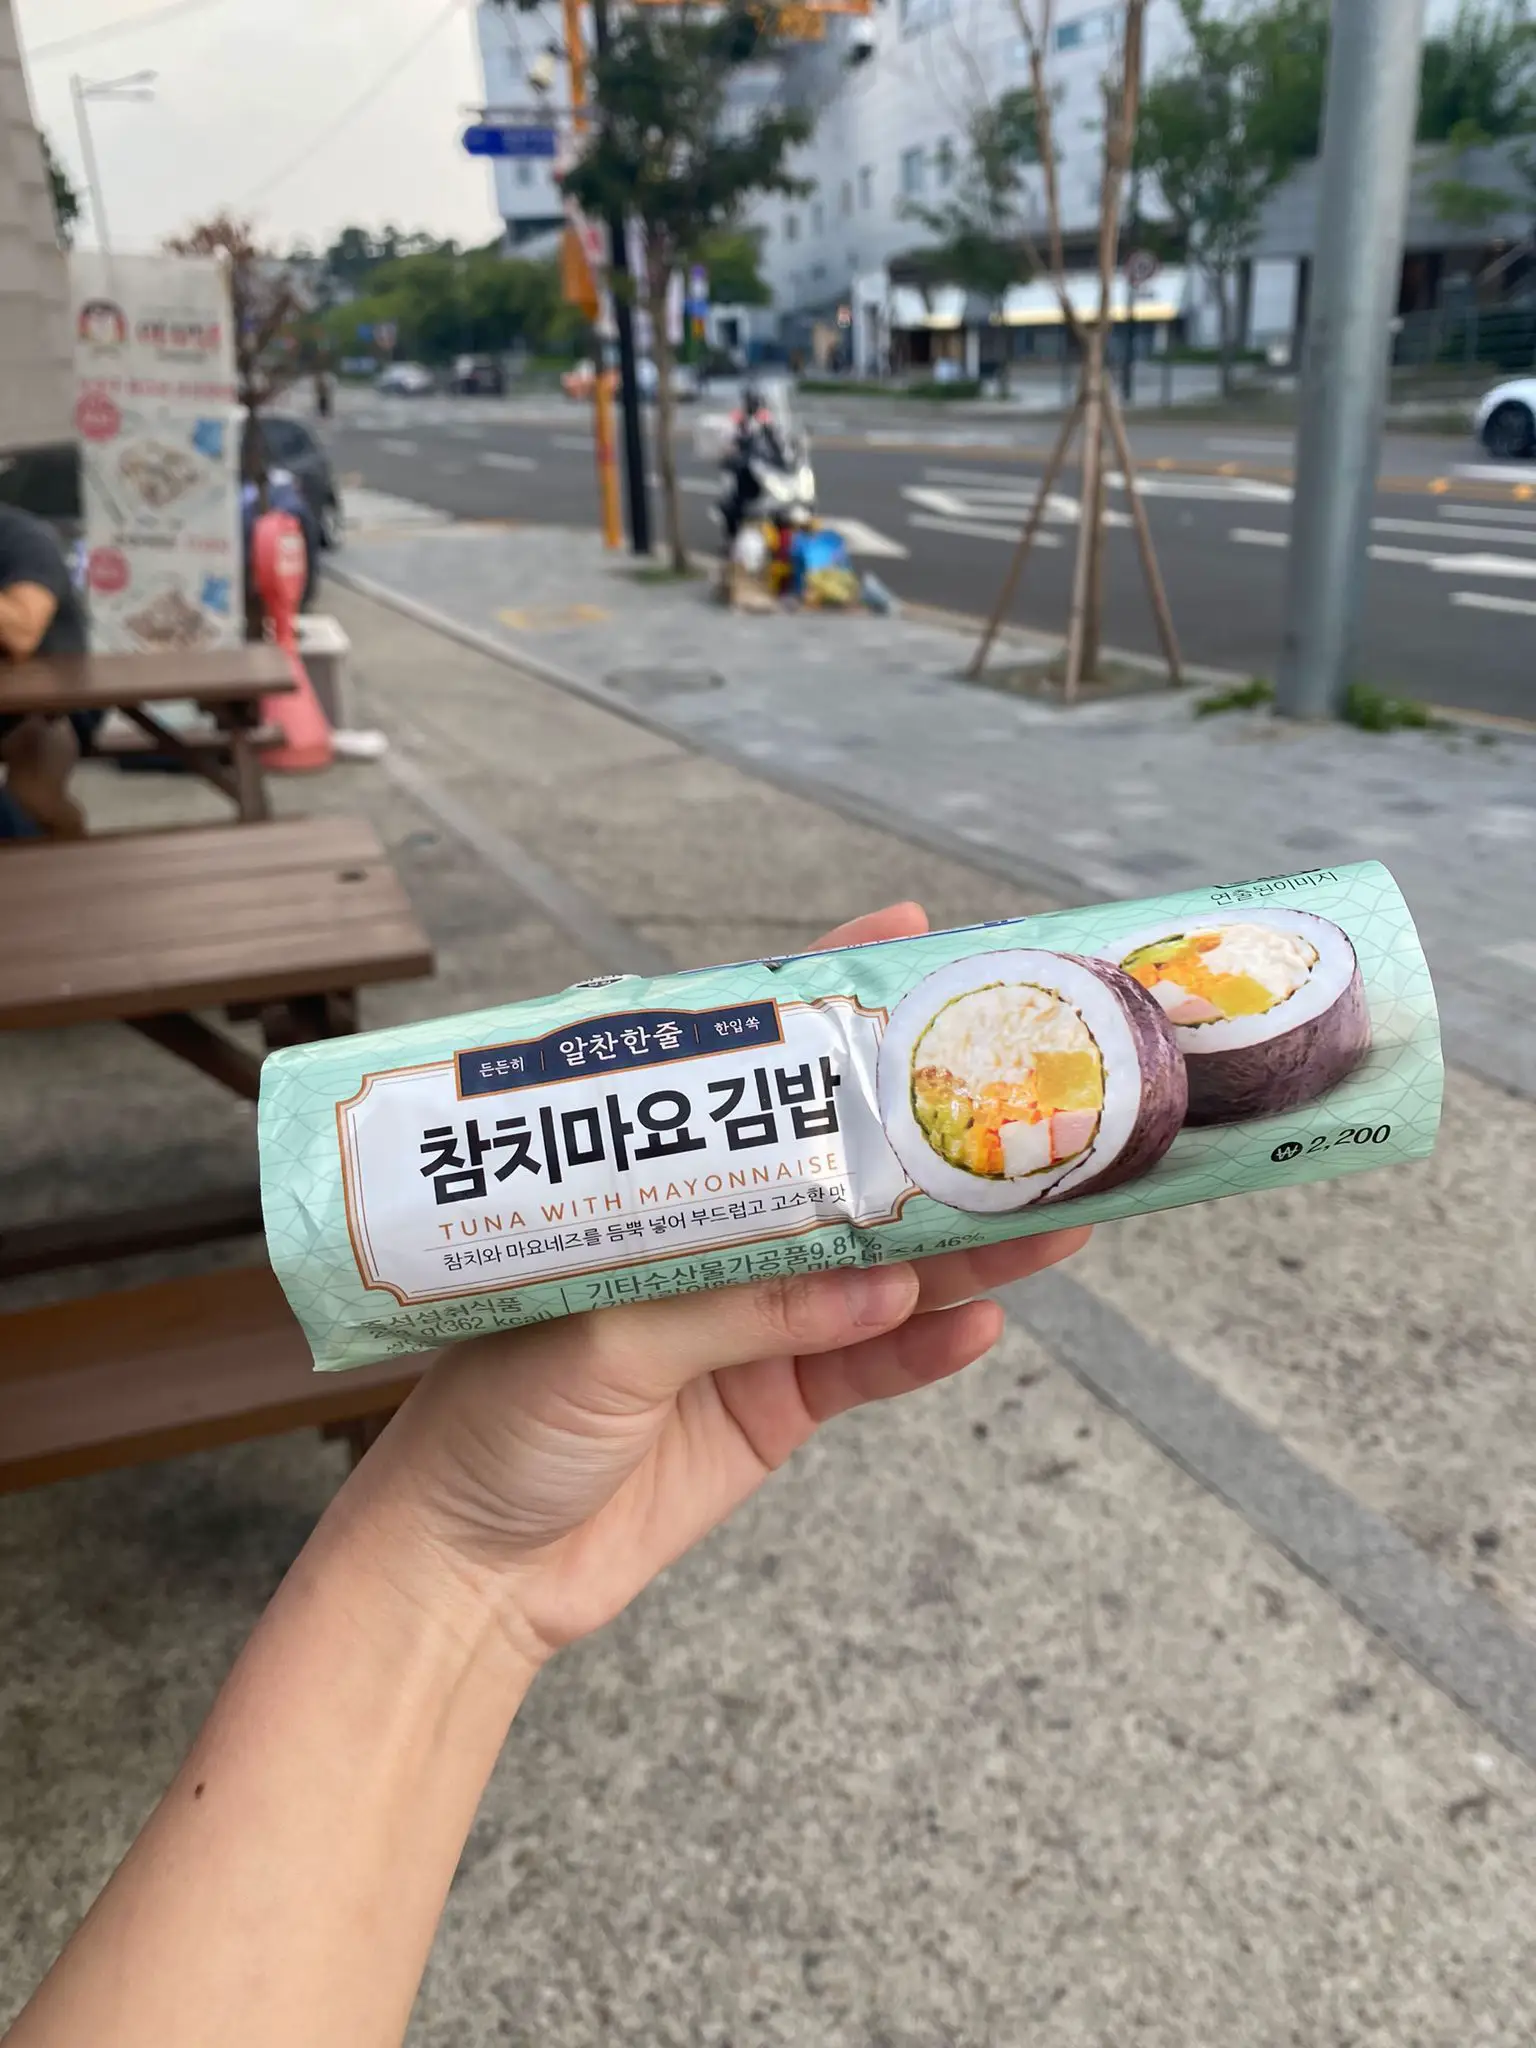 7-ELEVEN IN KOREA 🧃🍫🇰🇷 Korean 7-Eleven